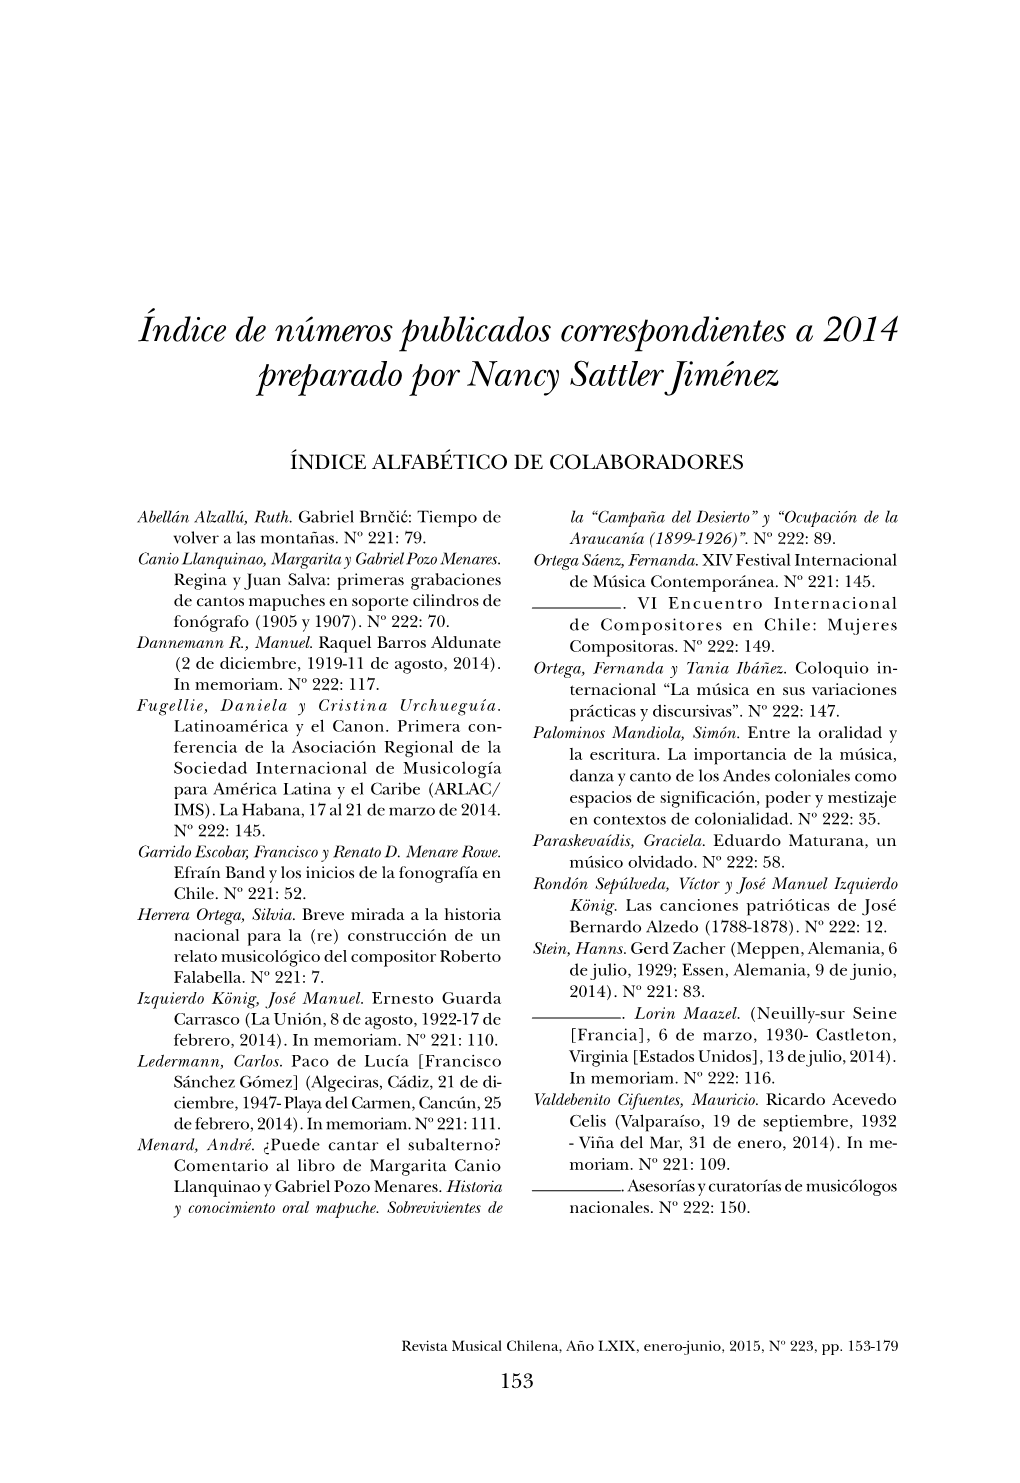 Índice De Números Publicados Correspondientes a 2014 Preparado Por Nancy Sattler Jiménez